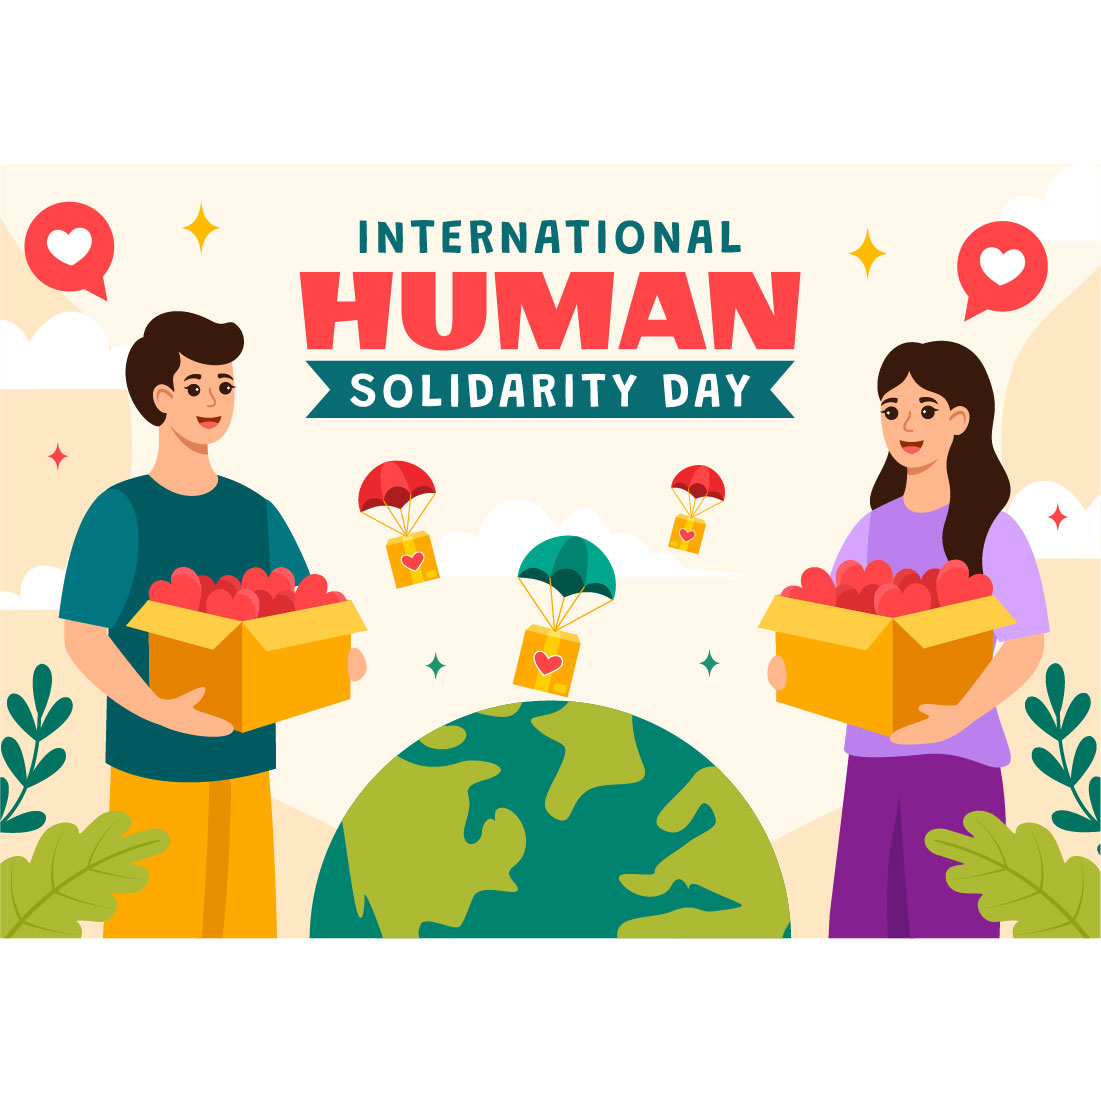 13 International Human Solidarity Day Illustration cover image.